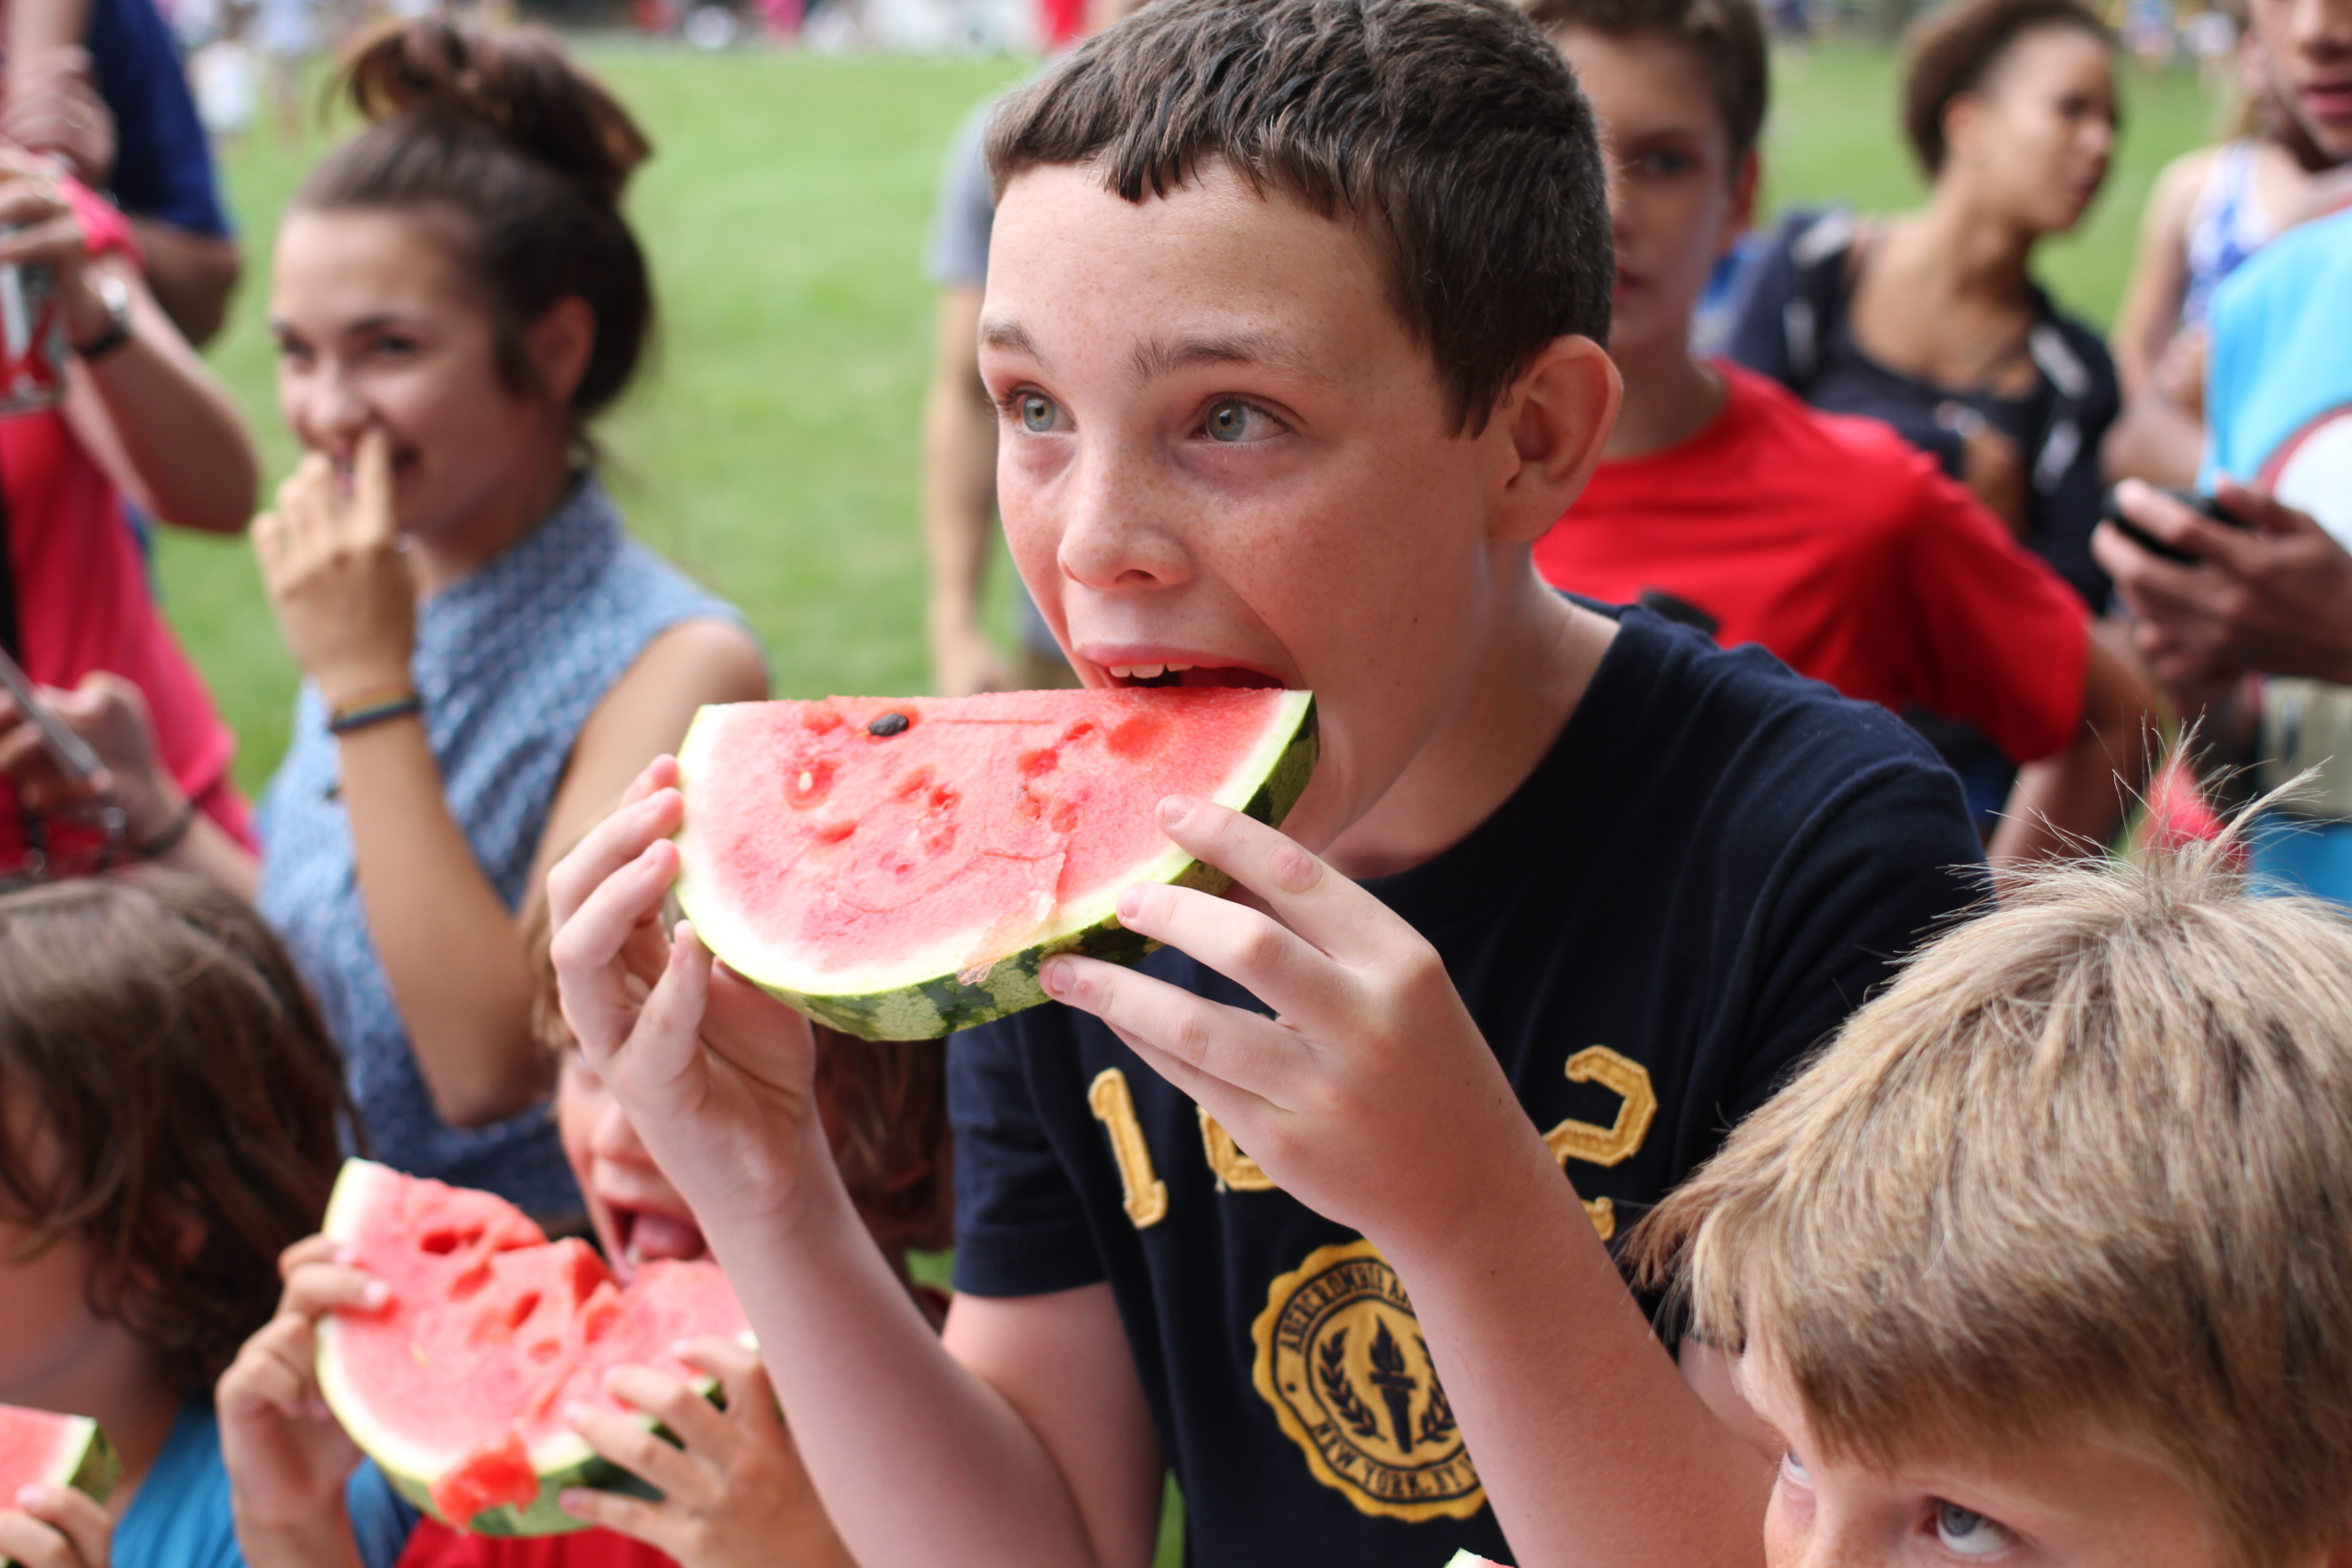 CIZ July 4 Watermelon Contest